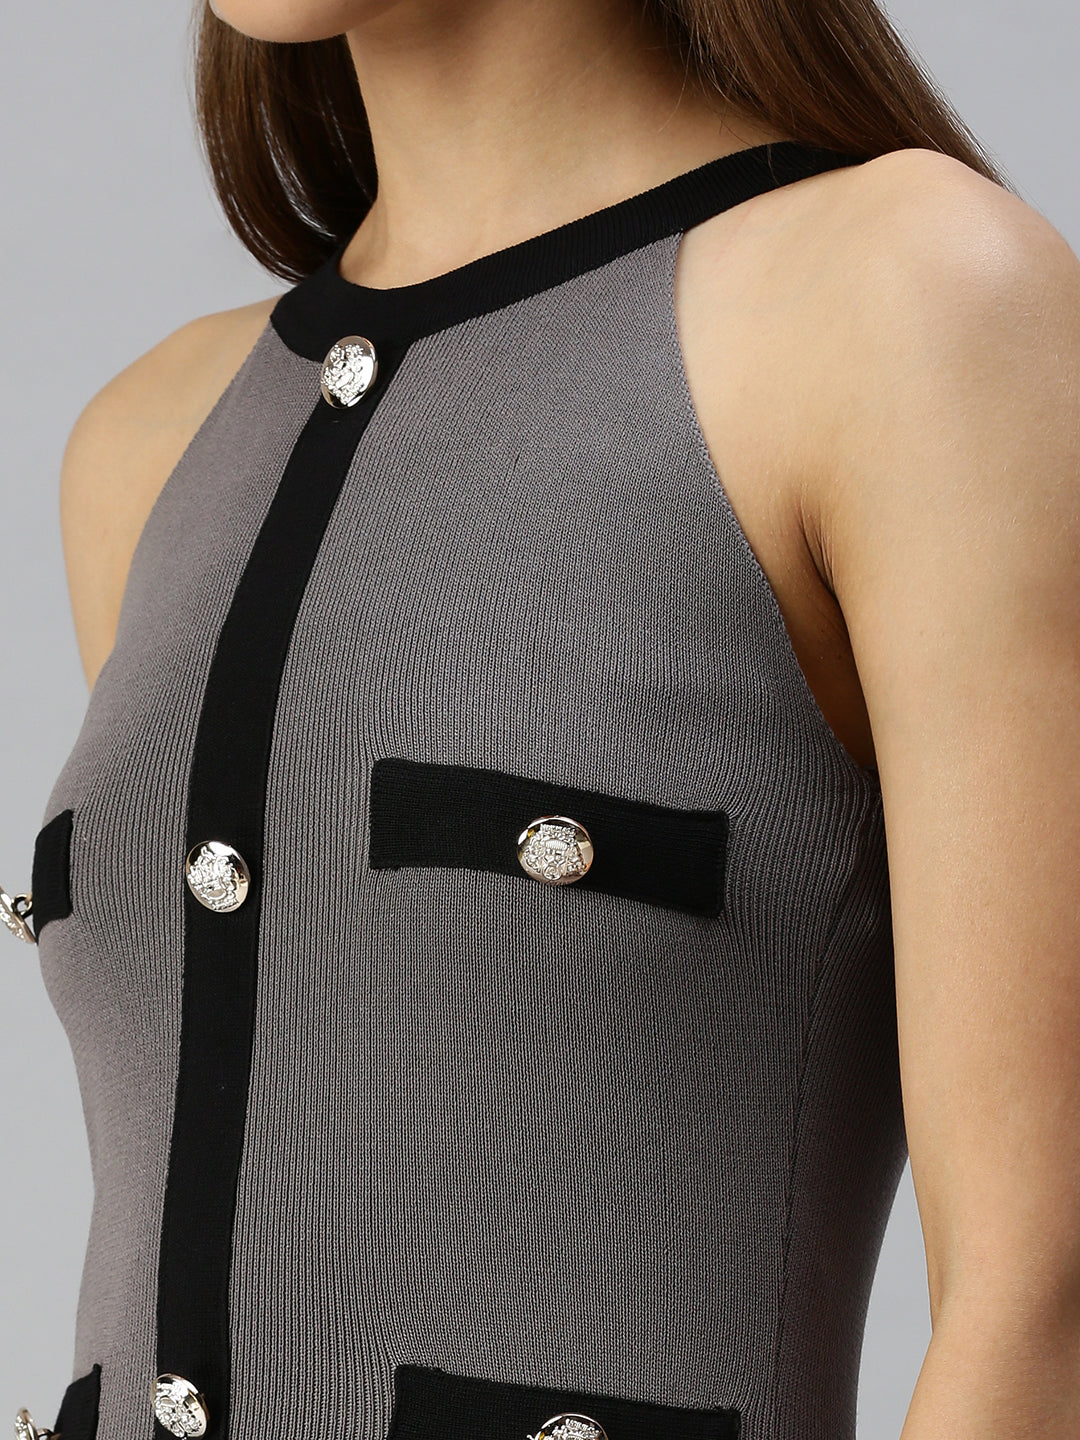 Women Shoulder Straps Solid Bodycon Grey Dress